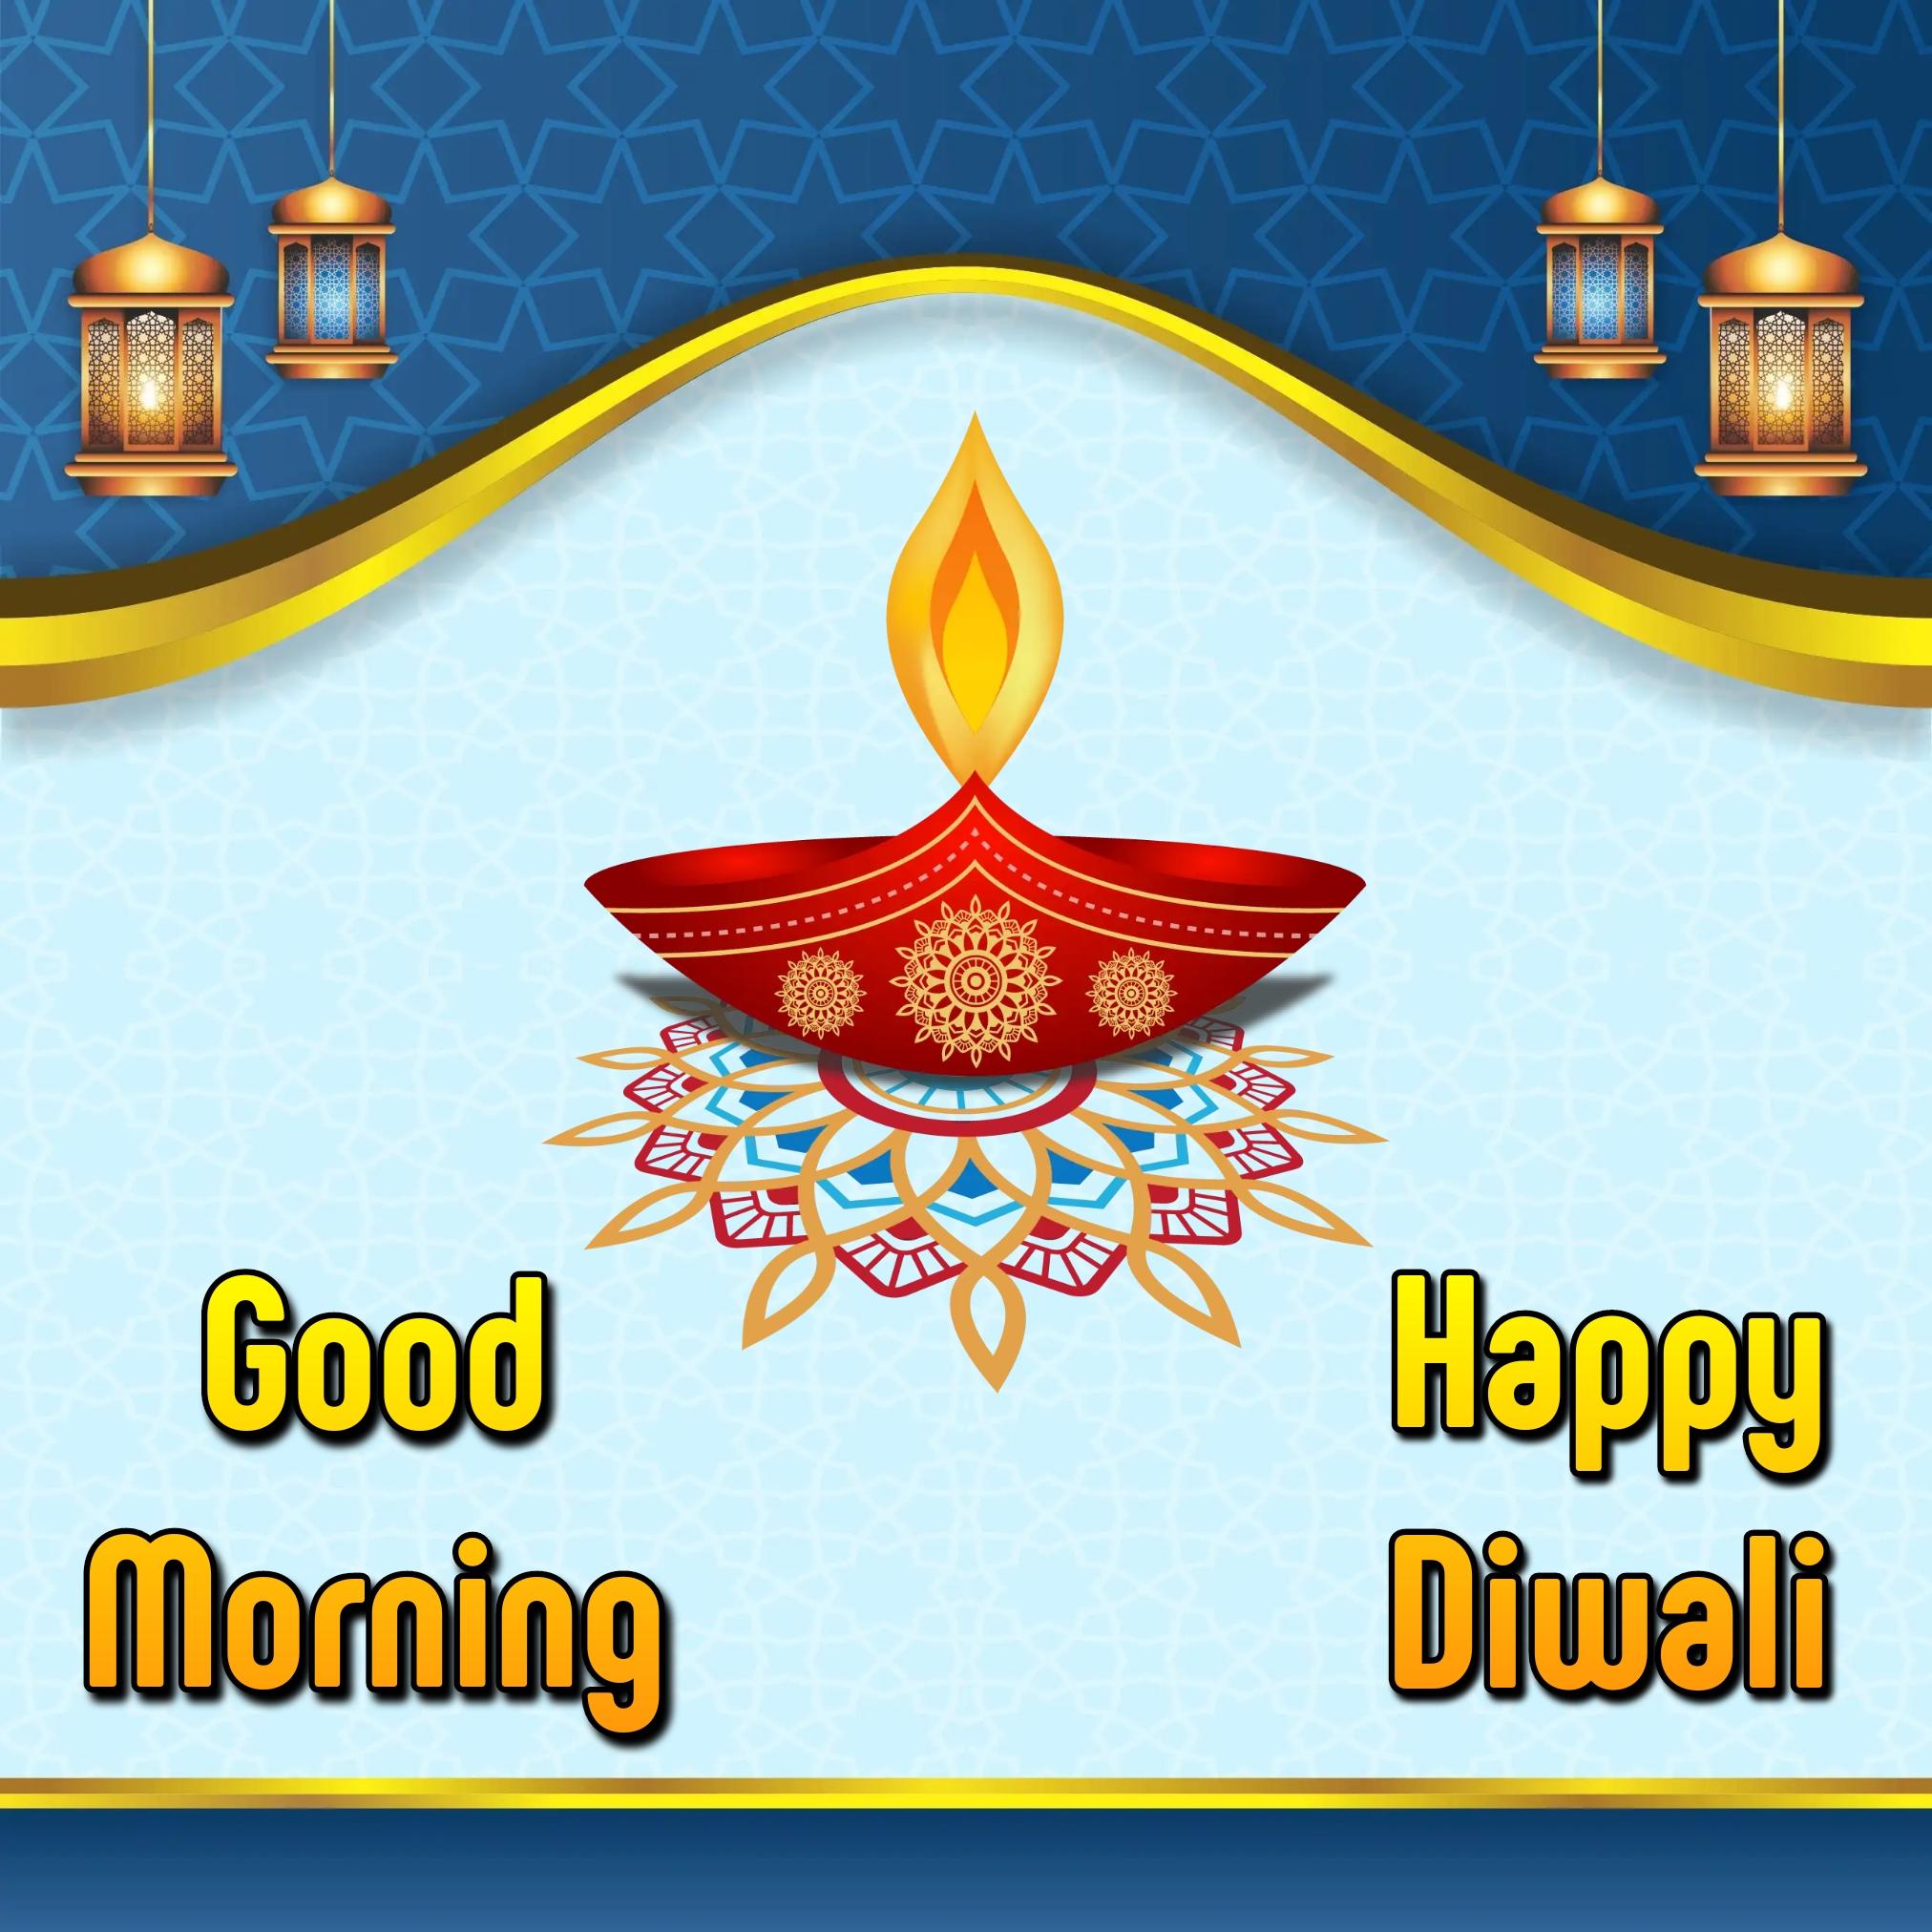 Good Morning Happy Diwali Images